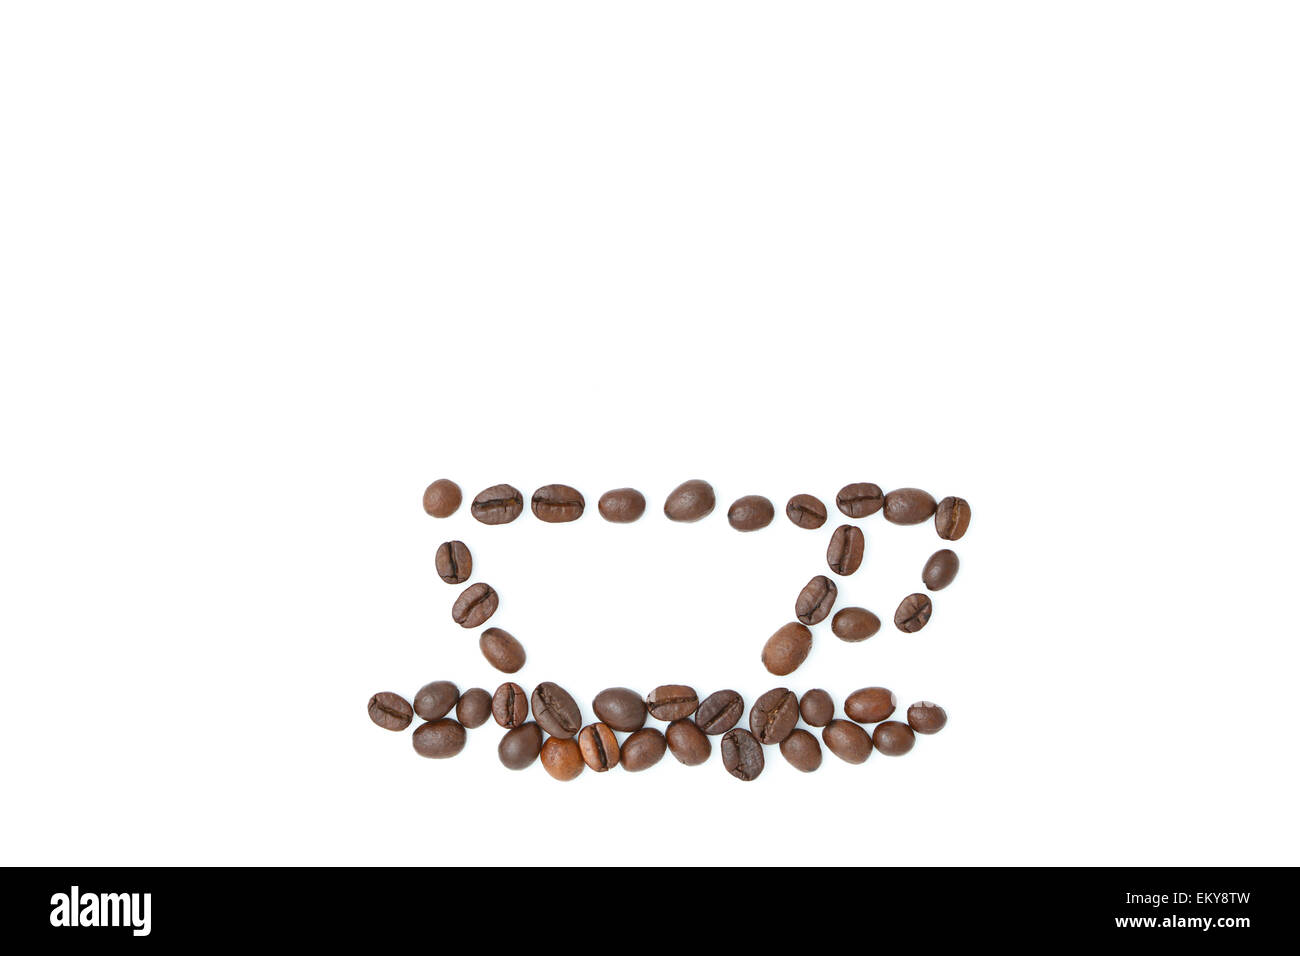 Coffee mug made of coffee beans isolated on white background studio shot Stock Photo